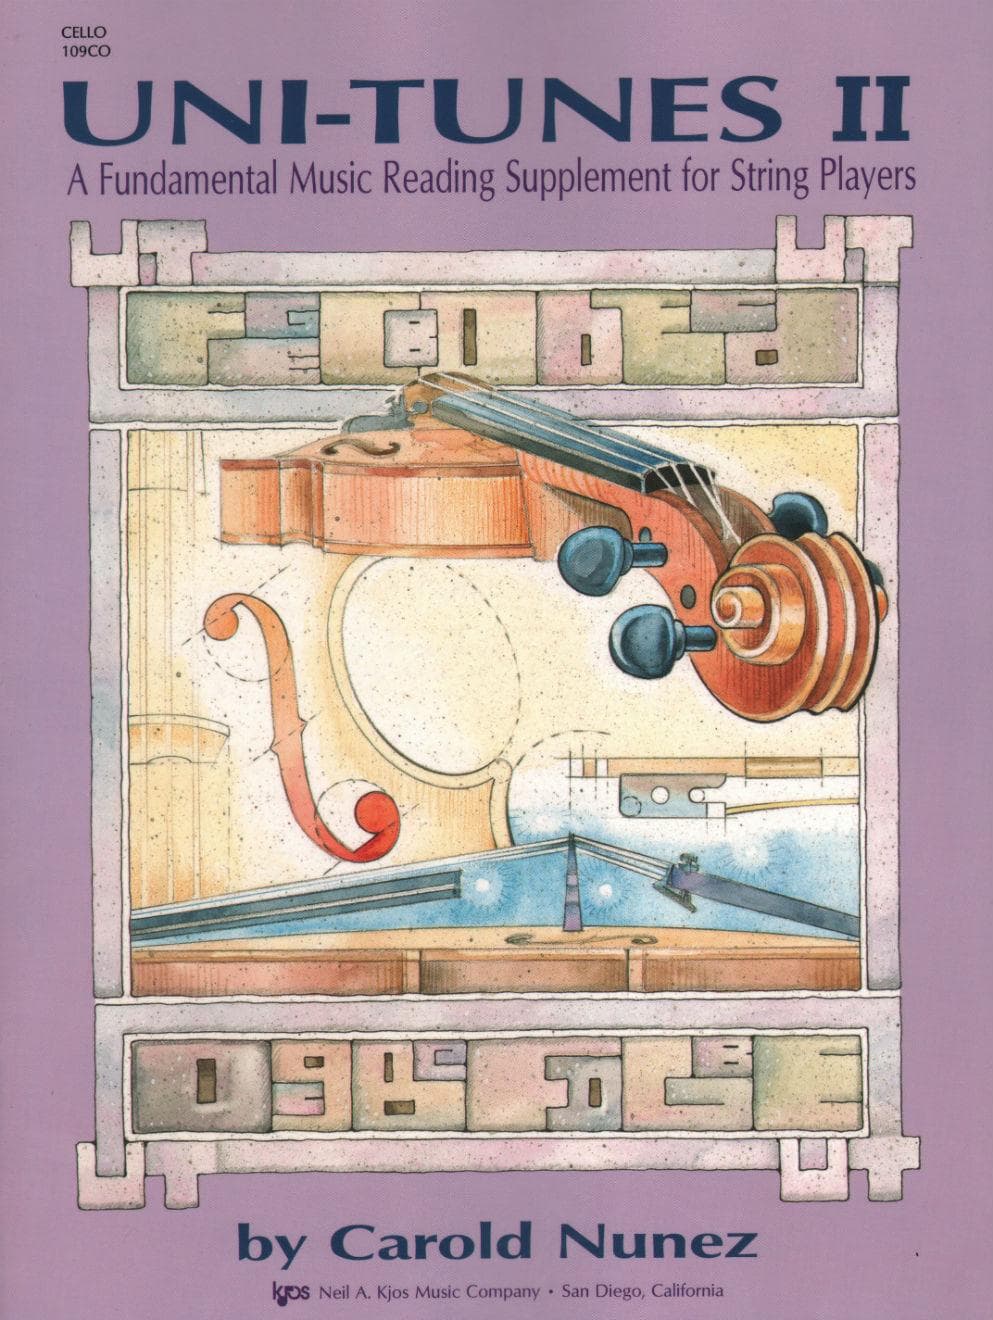 Uni-Tunes II Fundamental Reading Supplement-Cello By Carol Nunez Published by Neil A Kjos Music Company